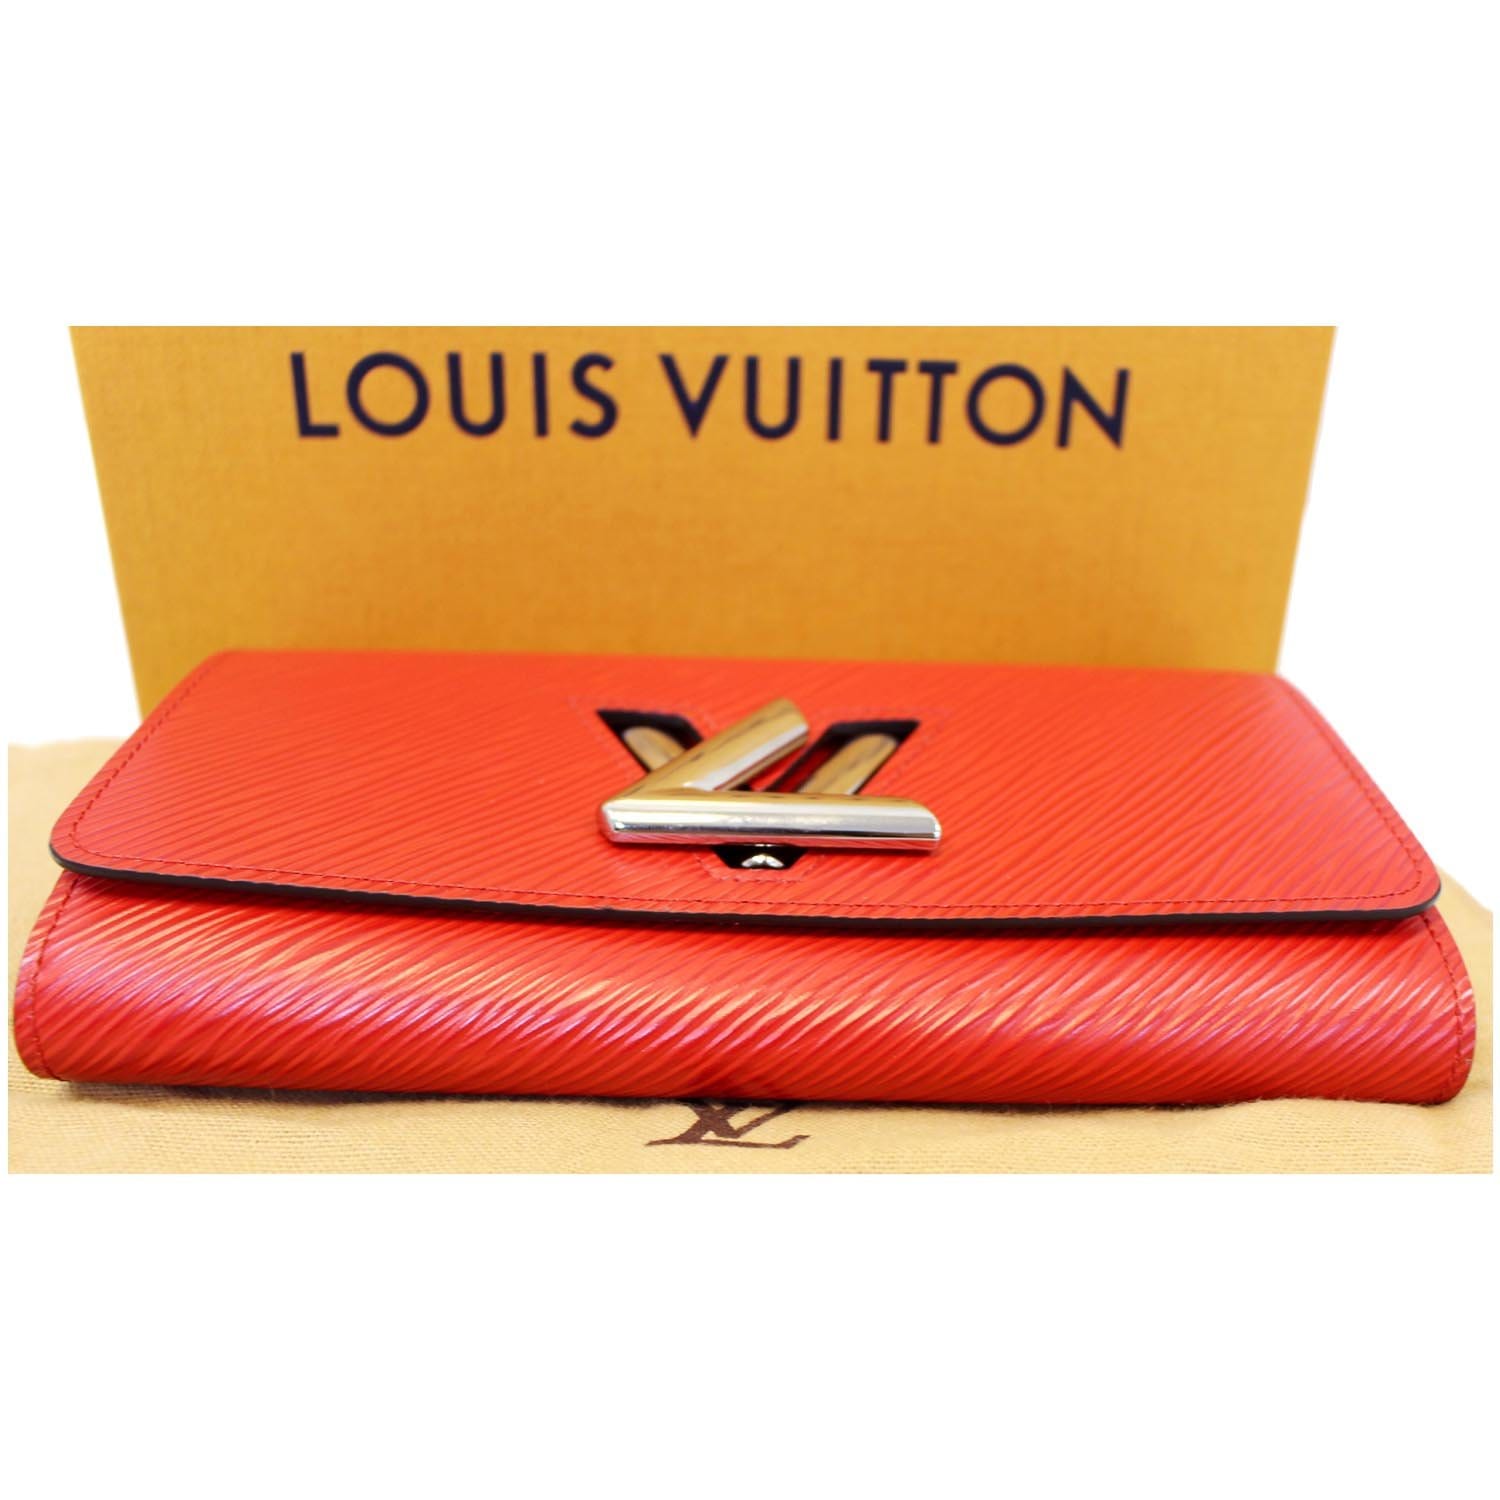 Kikipurchases: Louis Vuitton Wallet